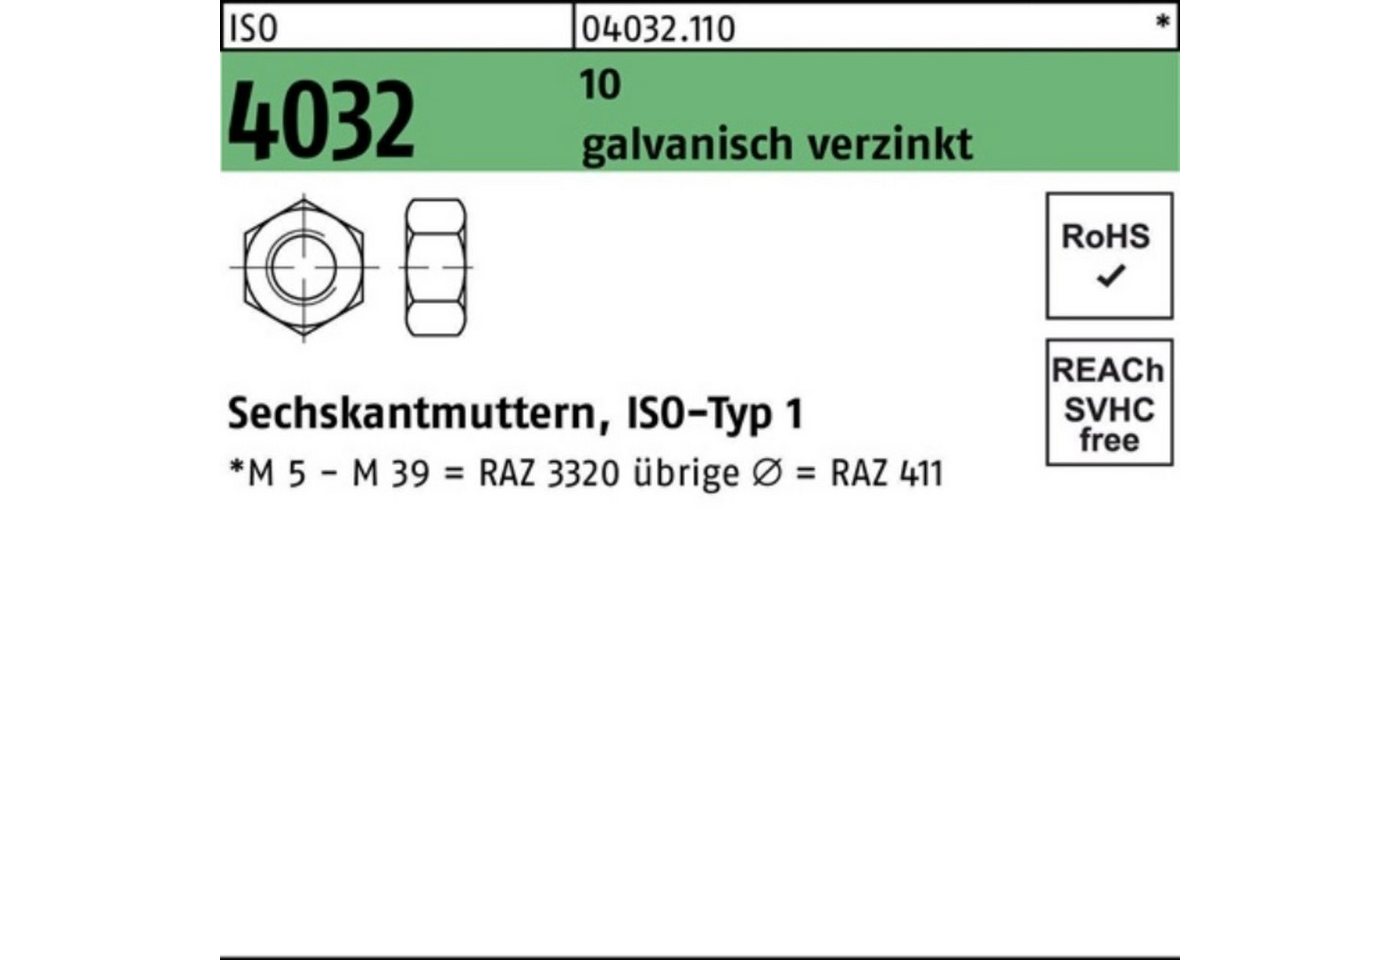 Bufab Muttern 100er Pack Sechskantmutter ISO 4032 M22 10 galv.verz. 50 Stück ISO 40 von Bufab